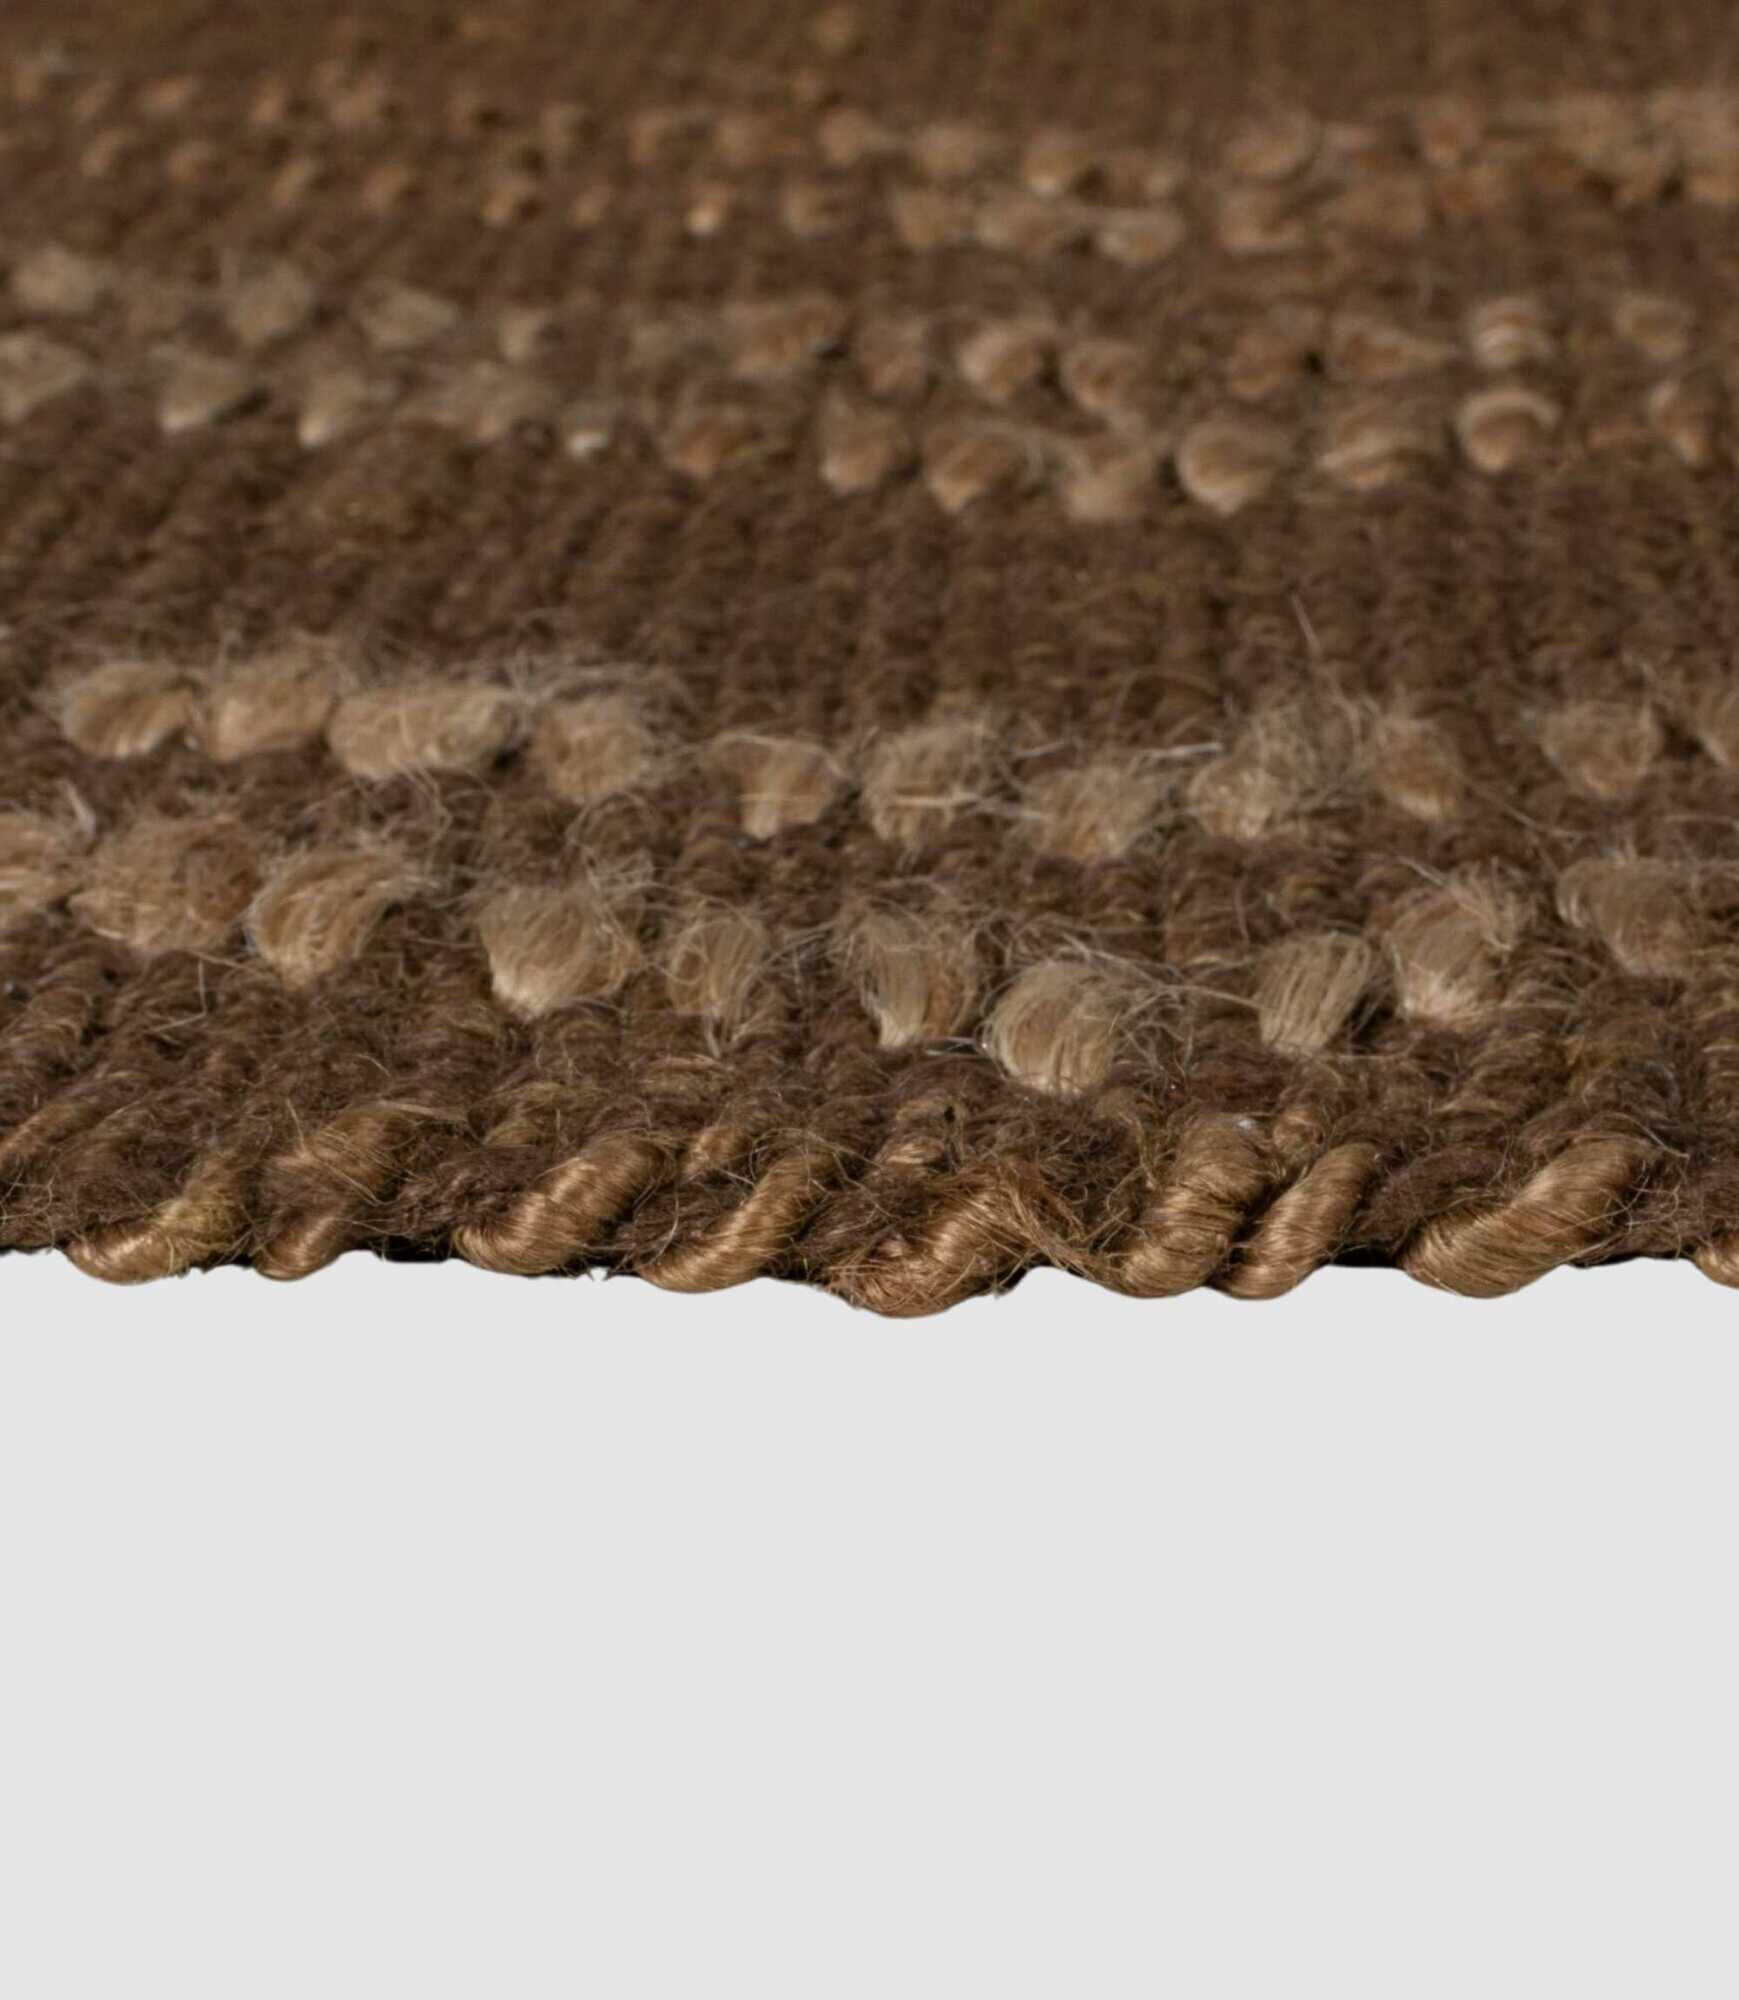 Jute-Teppich Trey Handgewebt Natur 160 x 230 cm 2